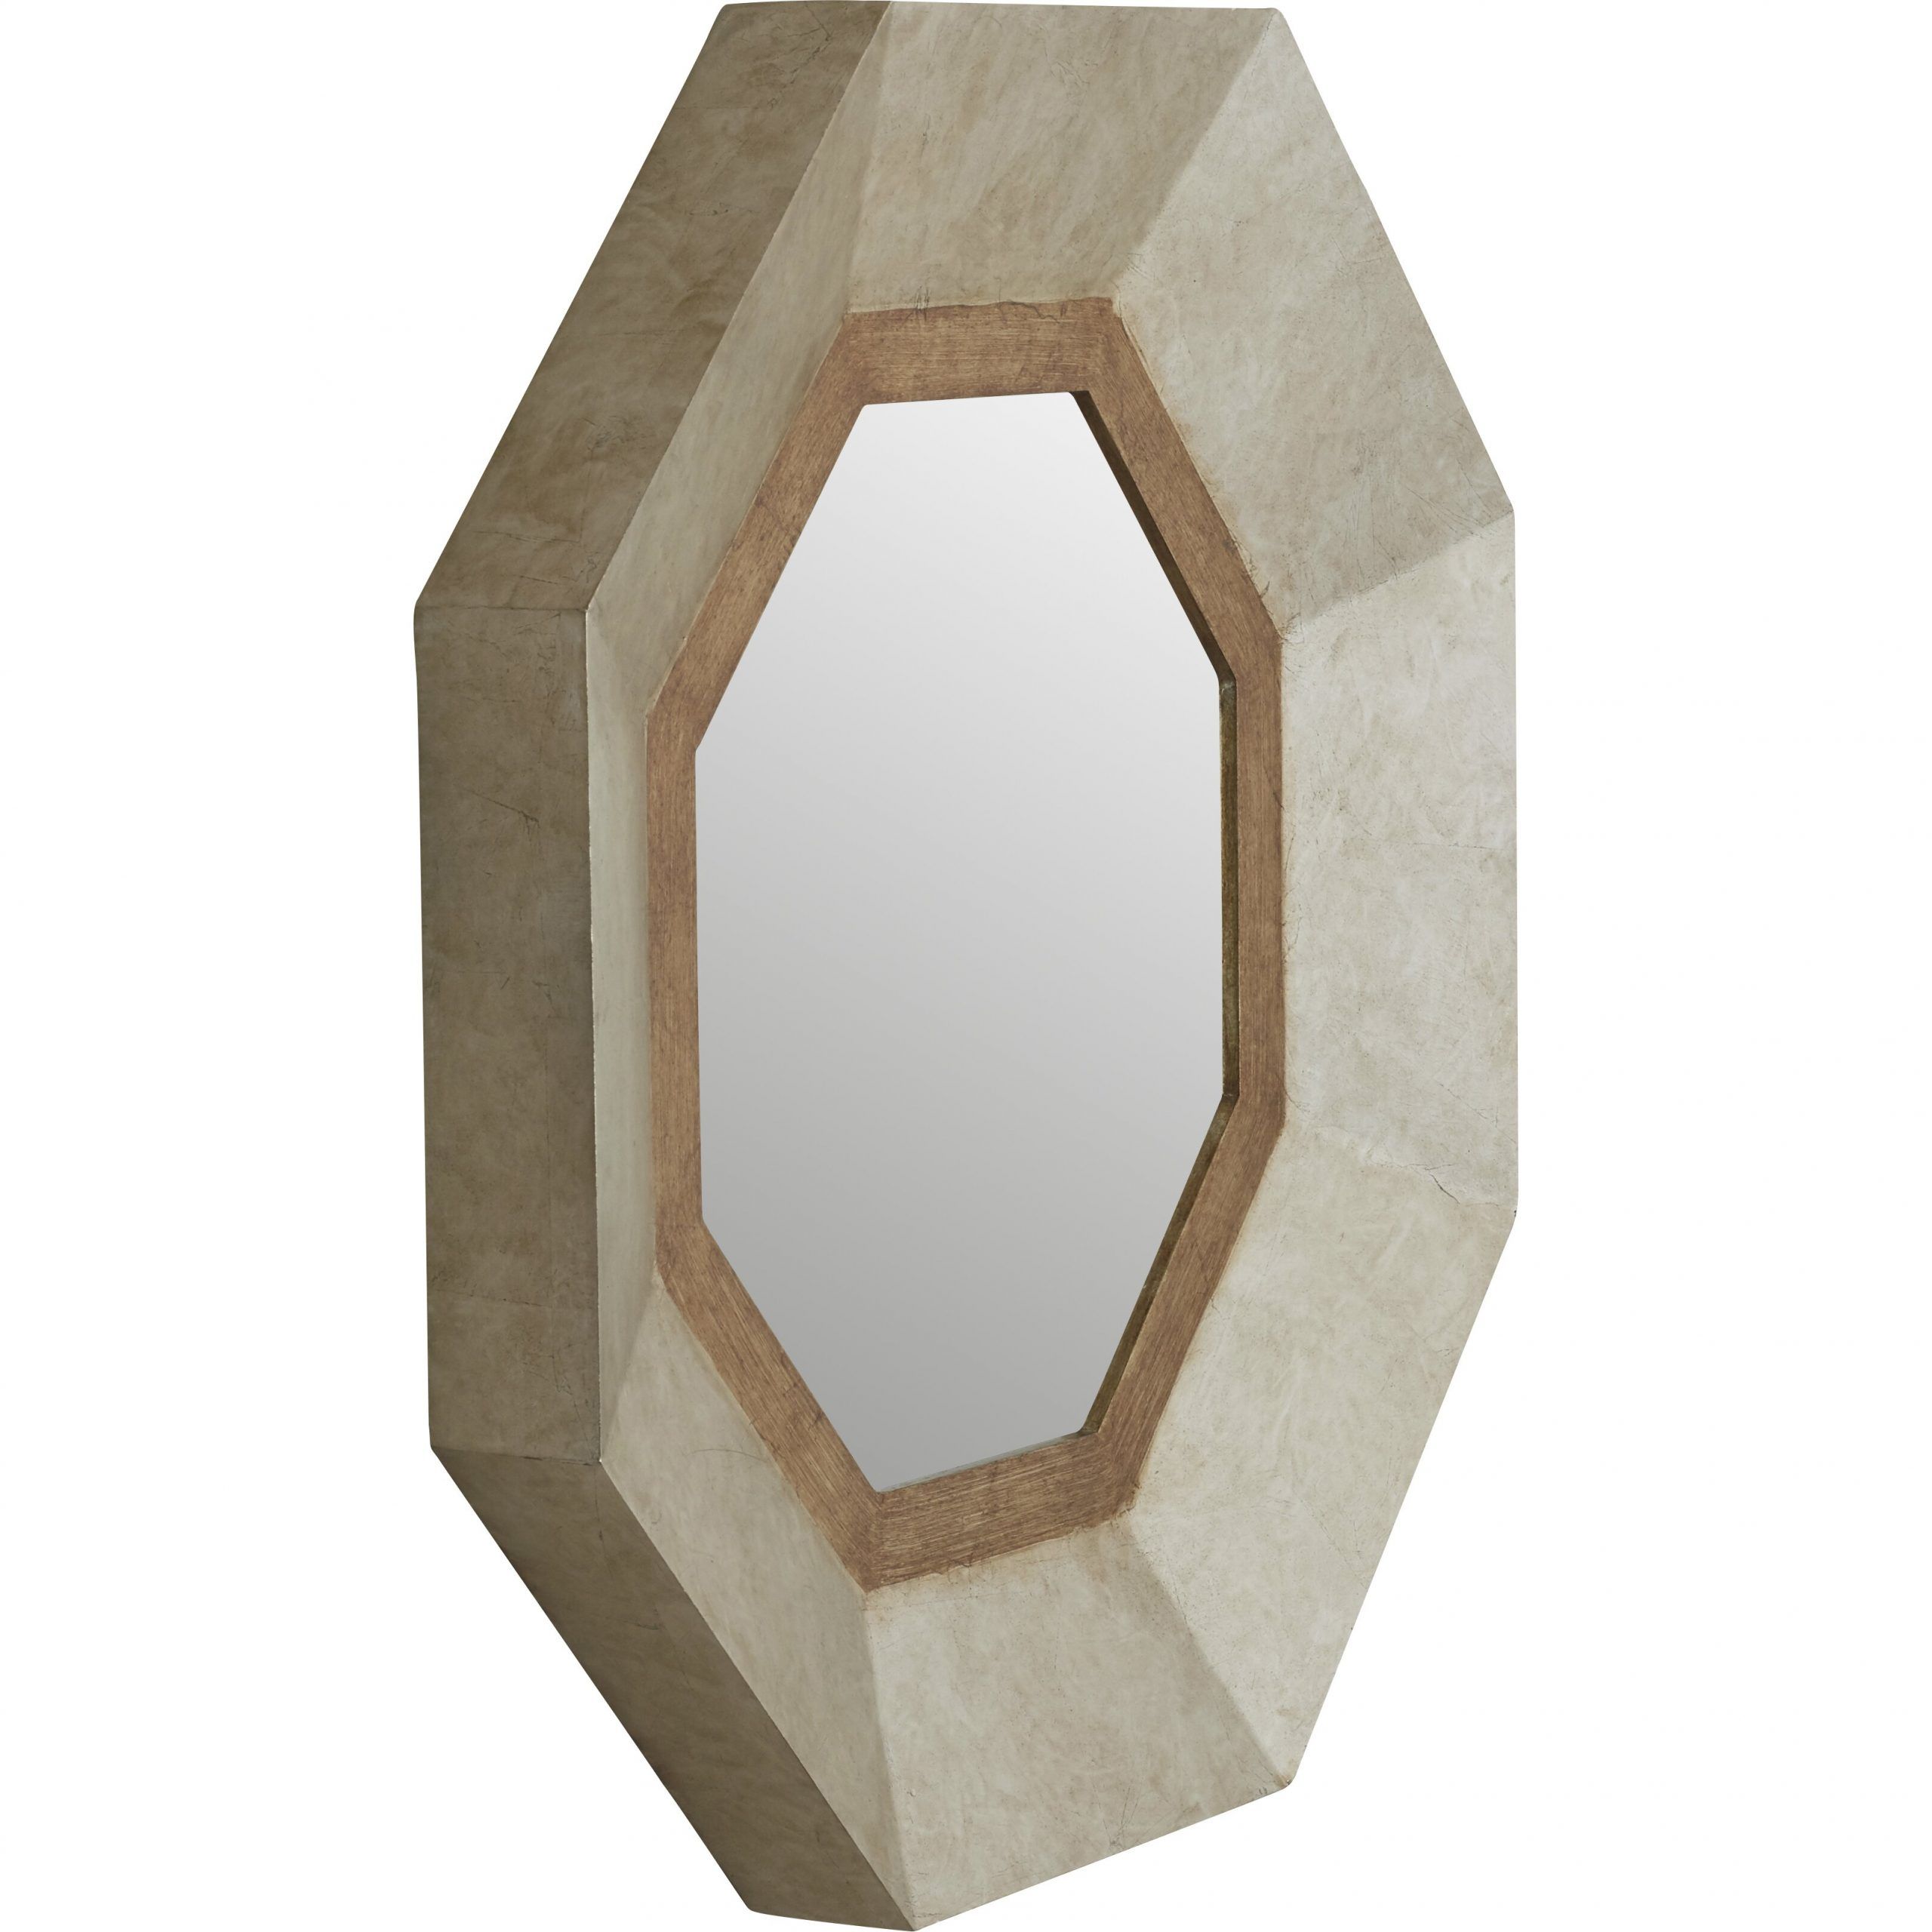 Brayden Studio Apollonia Octagonal Wall Mirror | Wayfair Intended For Octagon Wall Mirrors (View 1 of 15)